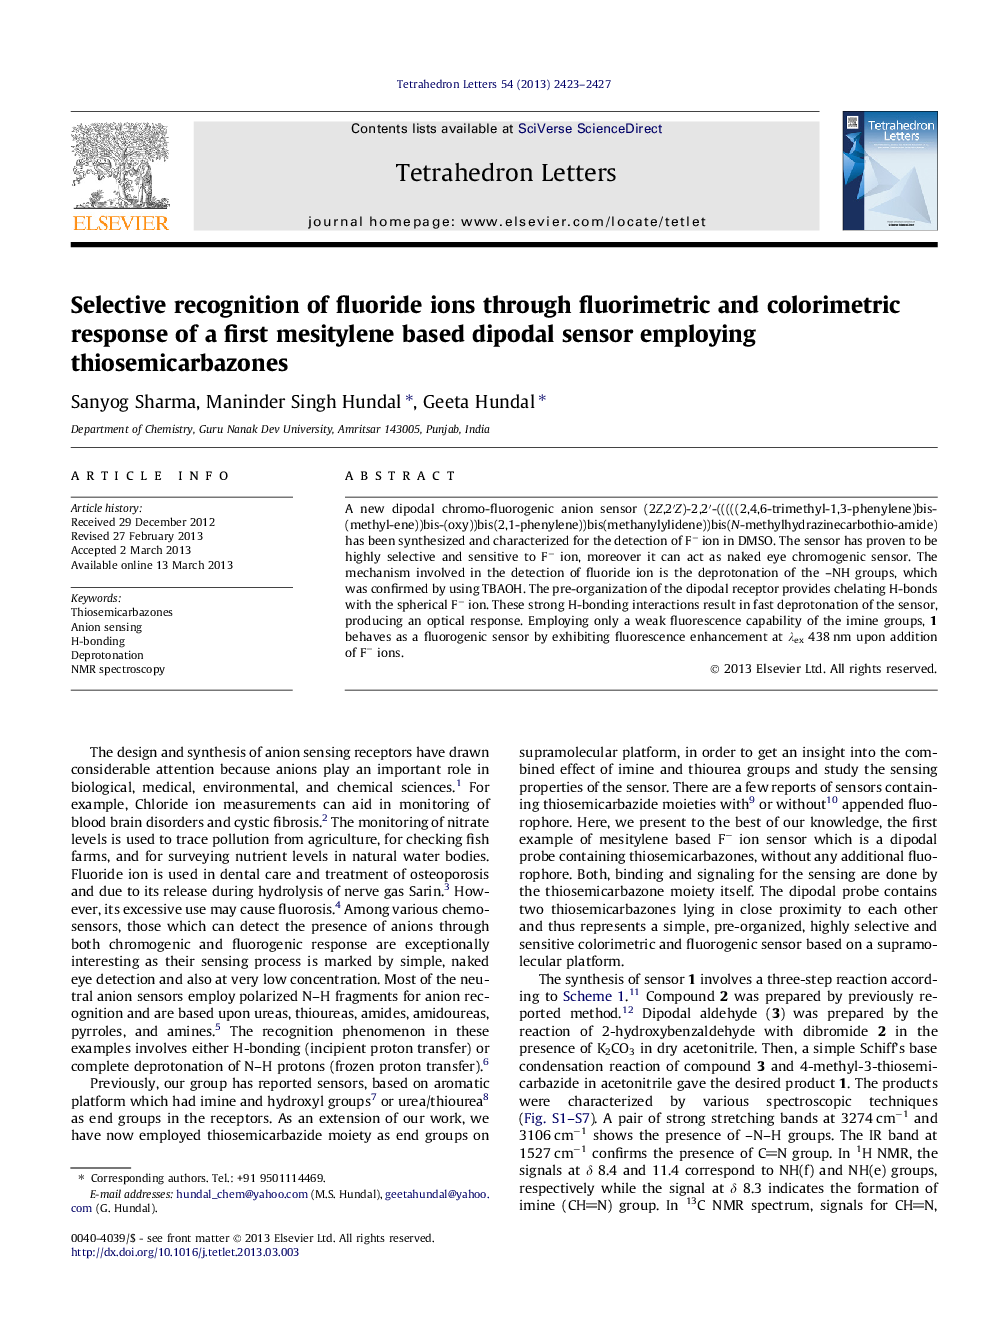 Selective recognition of fluoride ions through fluorimetric and colorimetric response of a first mesitylene based dipodal sensor 15employing thiosemicarbazones